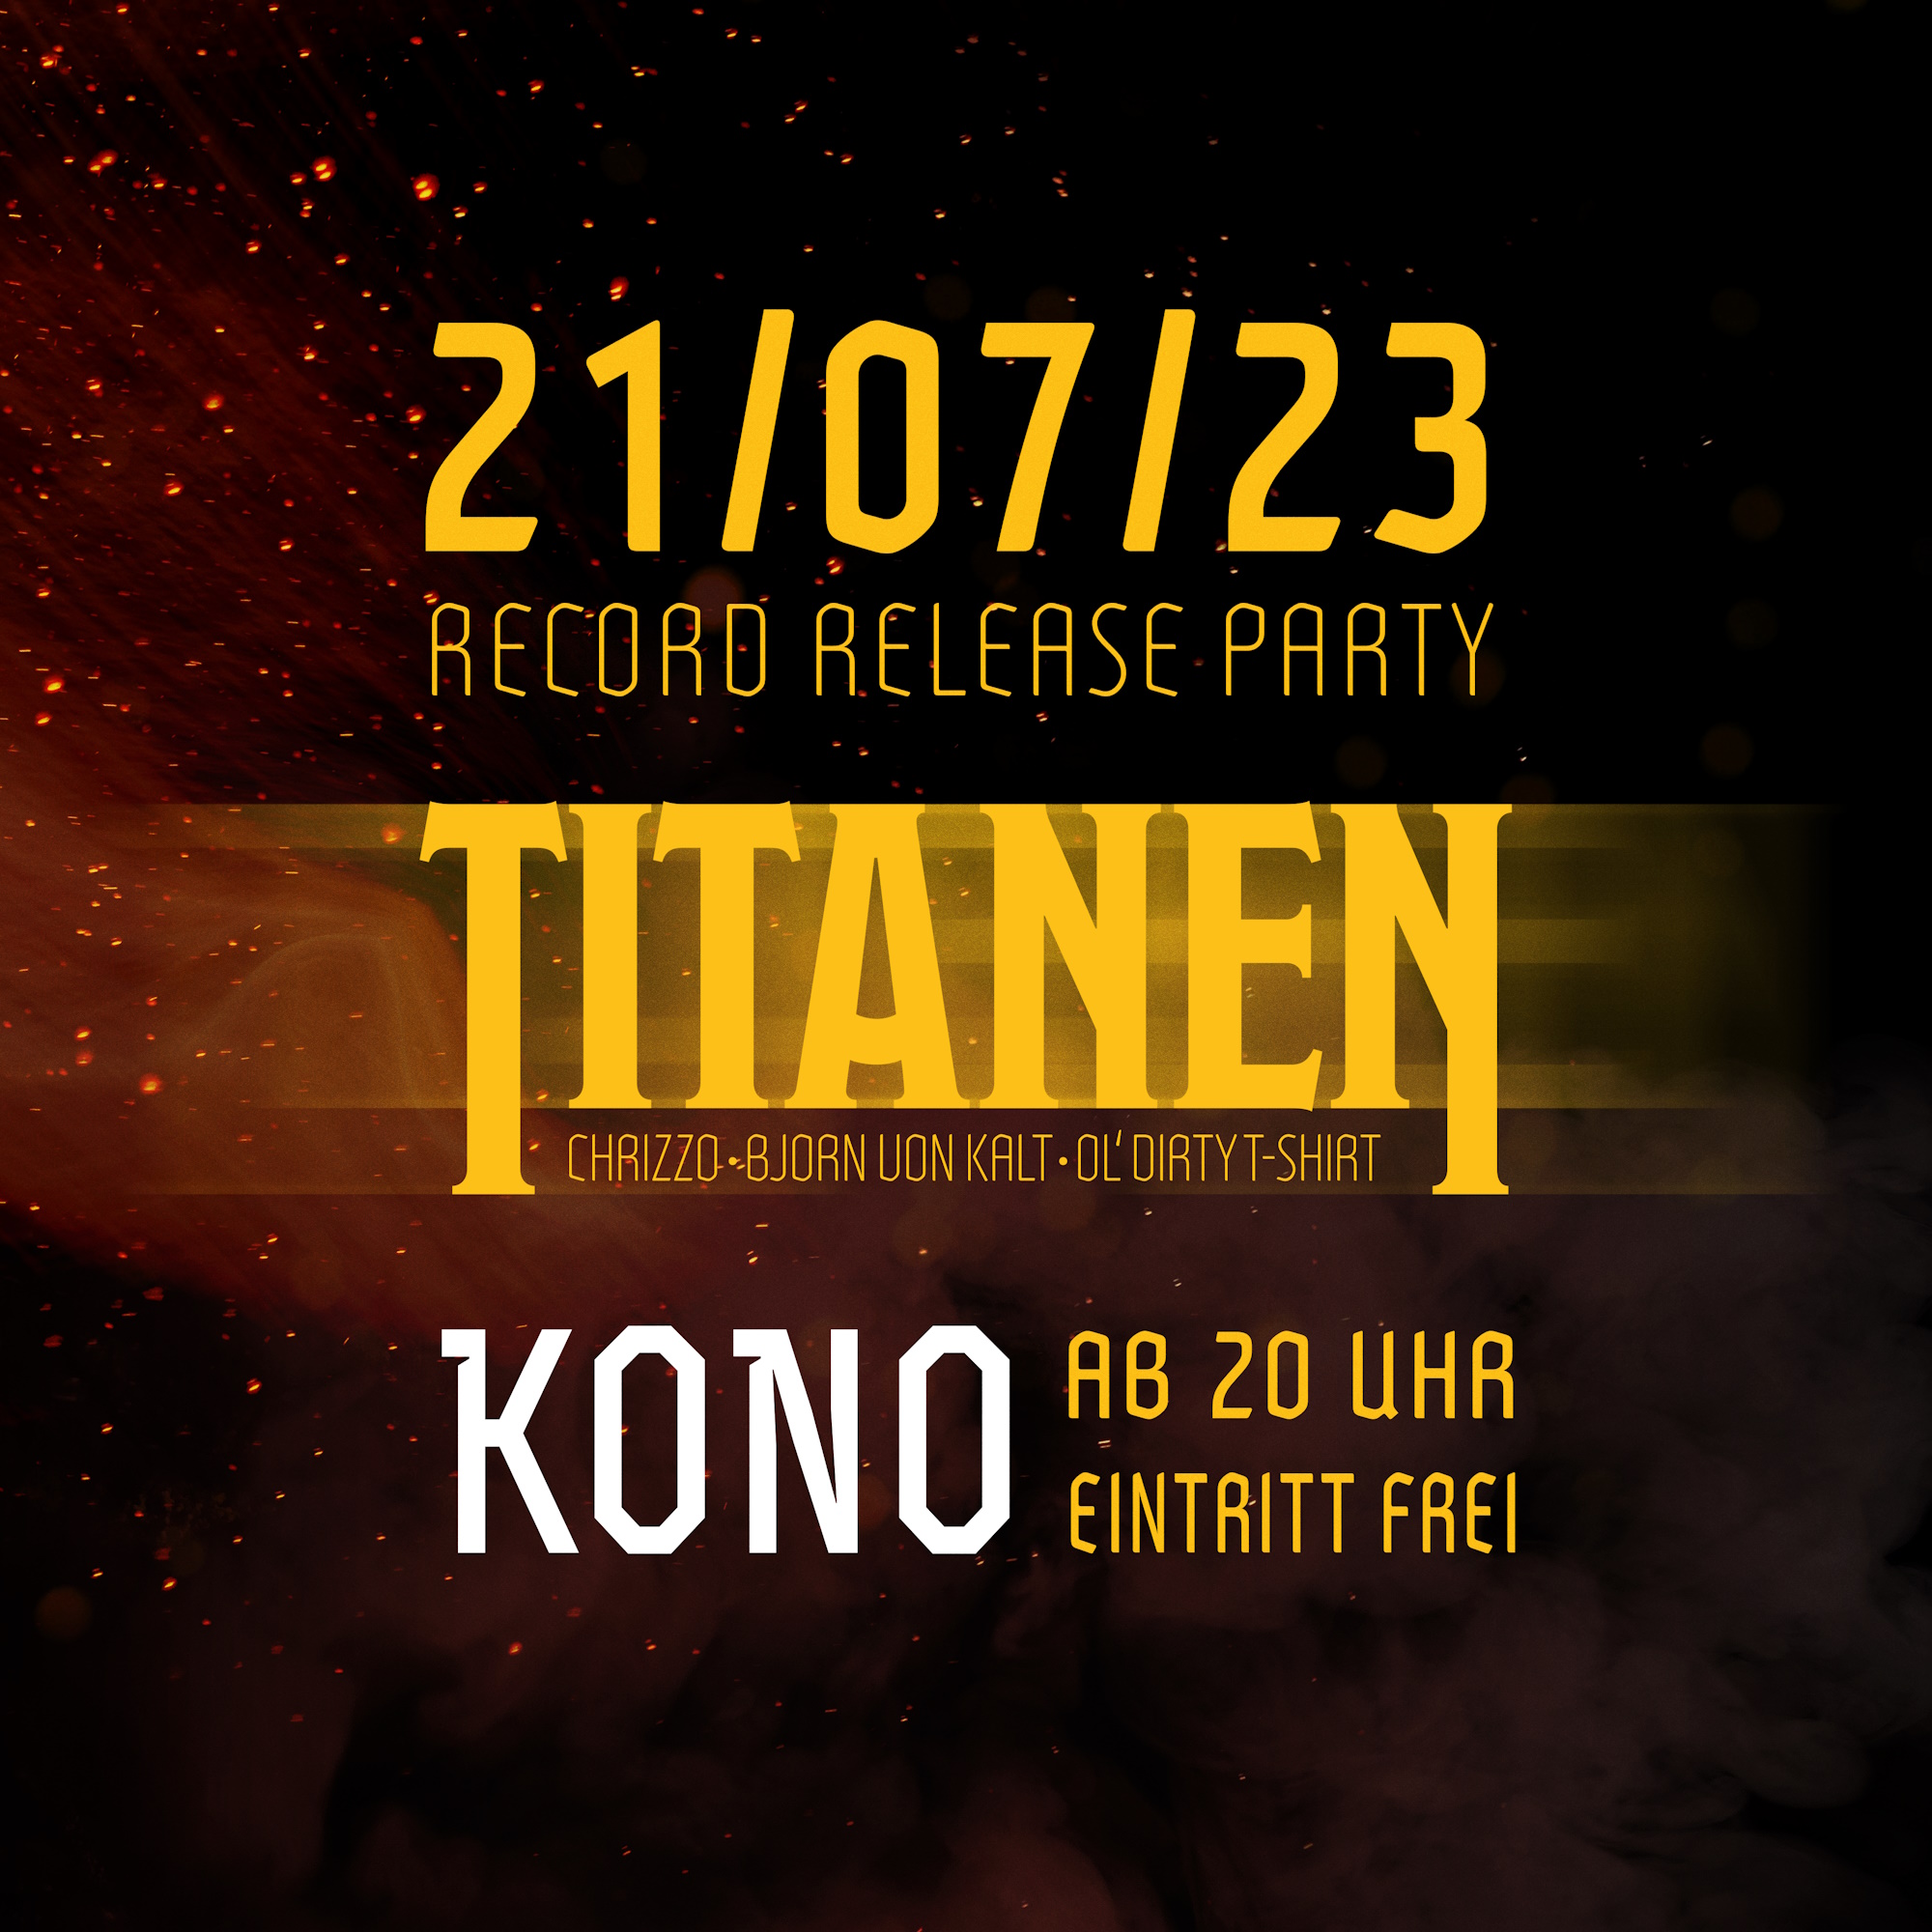 Titanen – Record Release Party